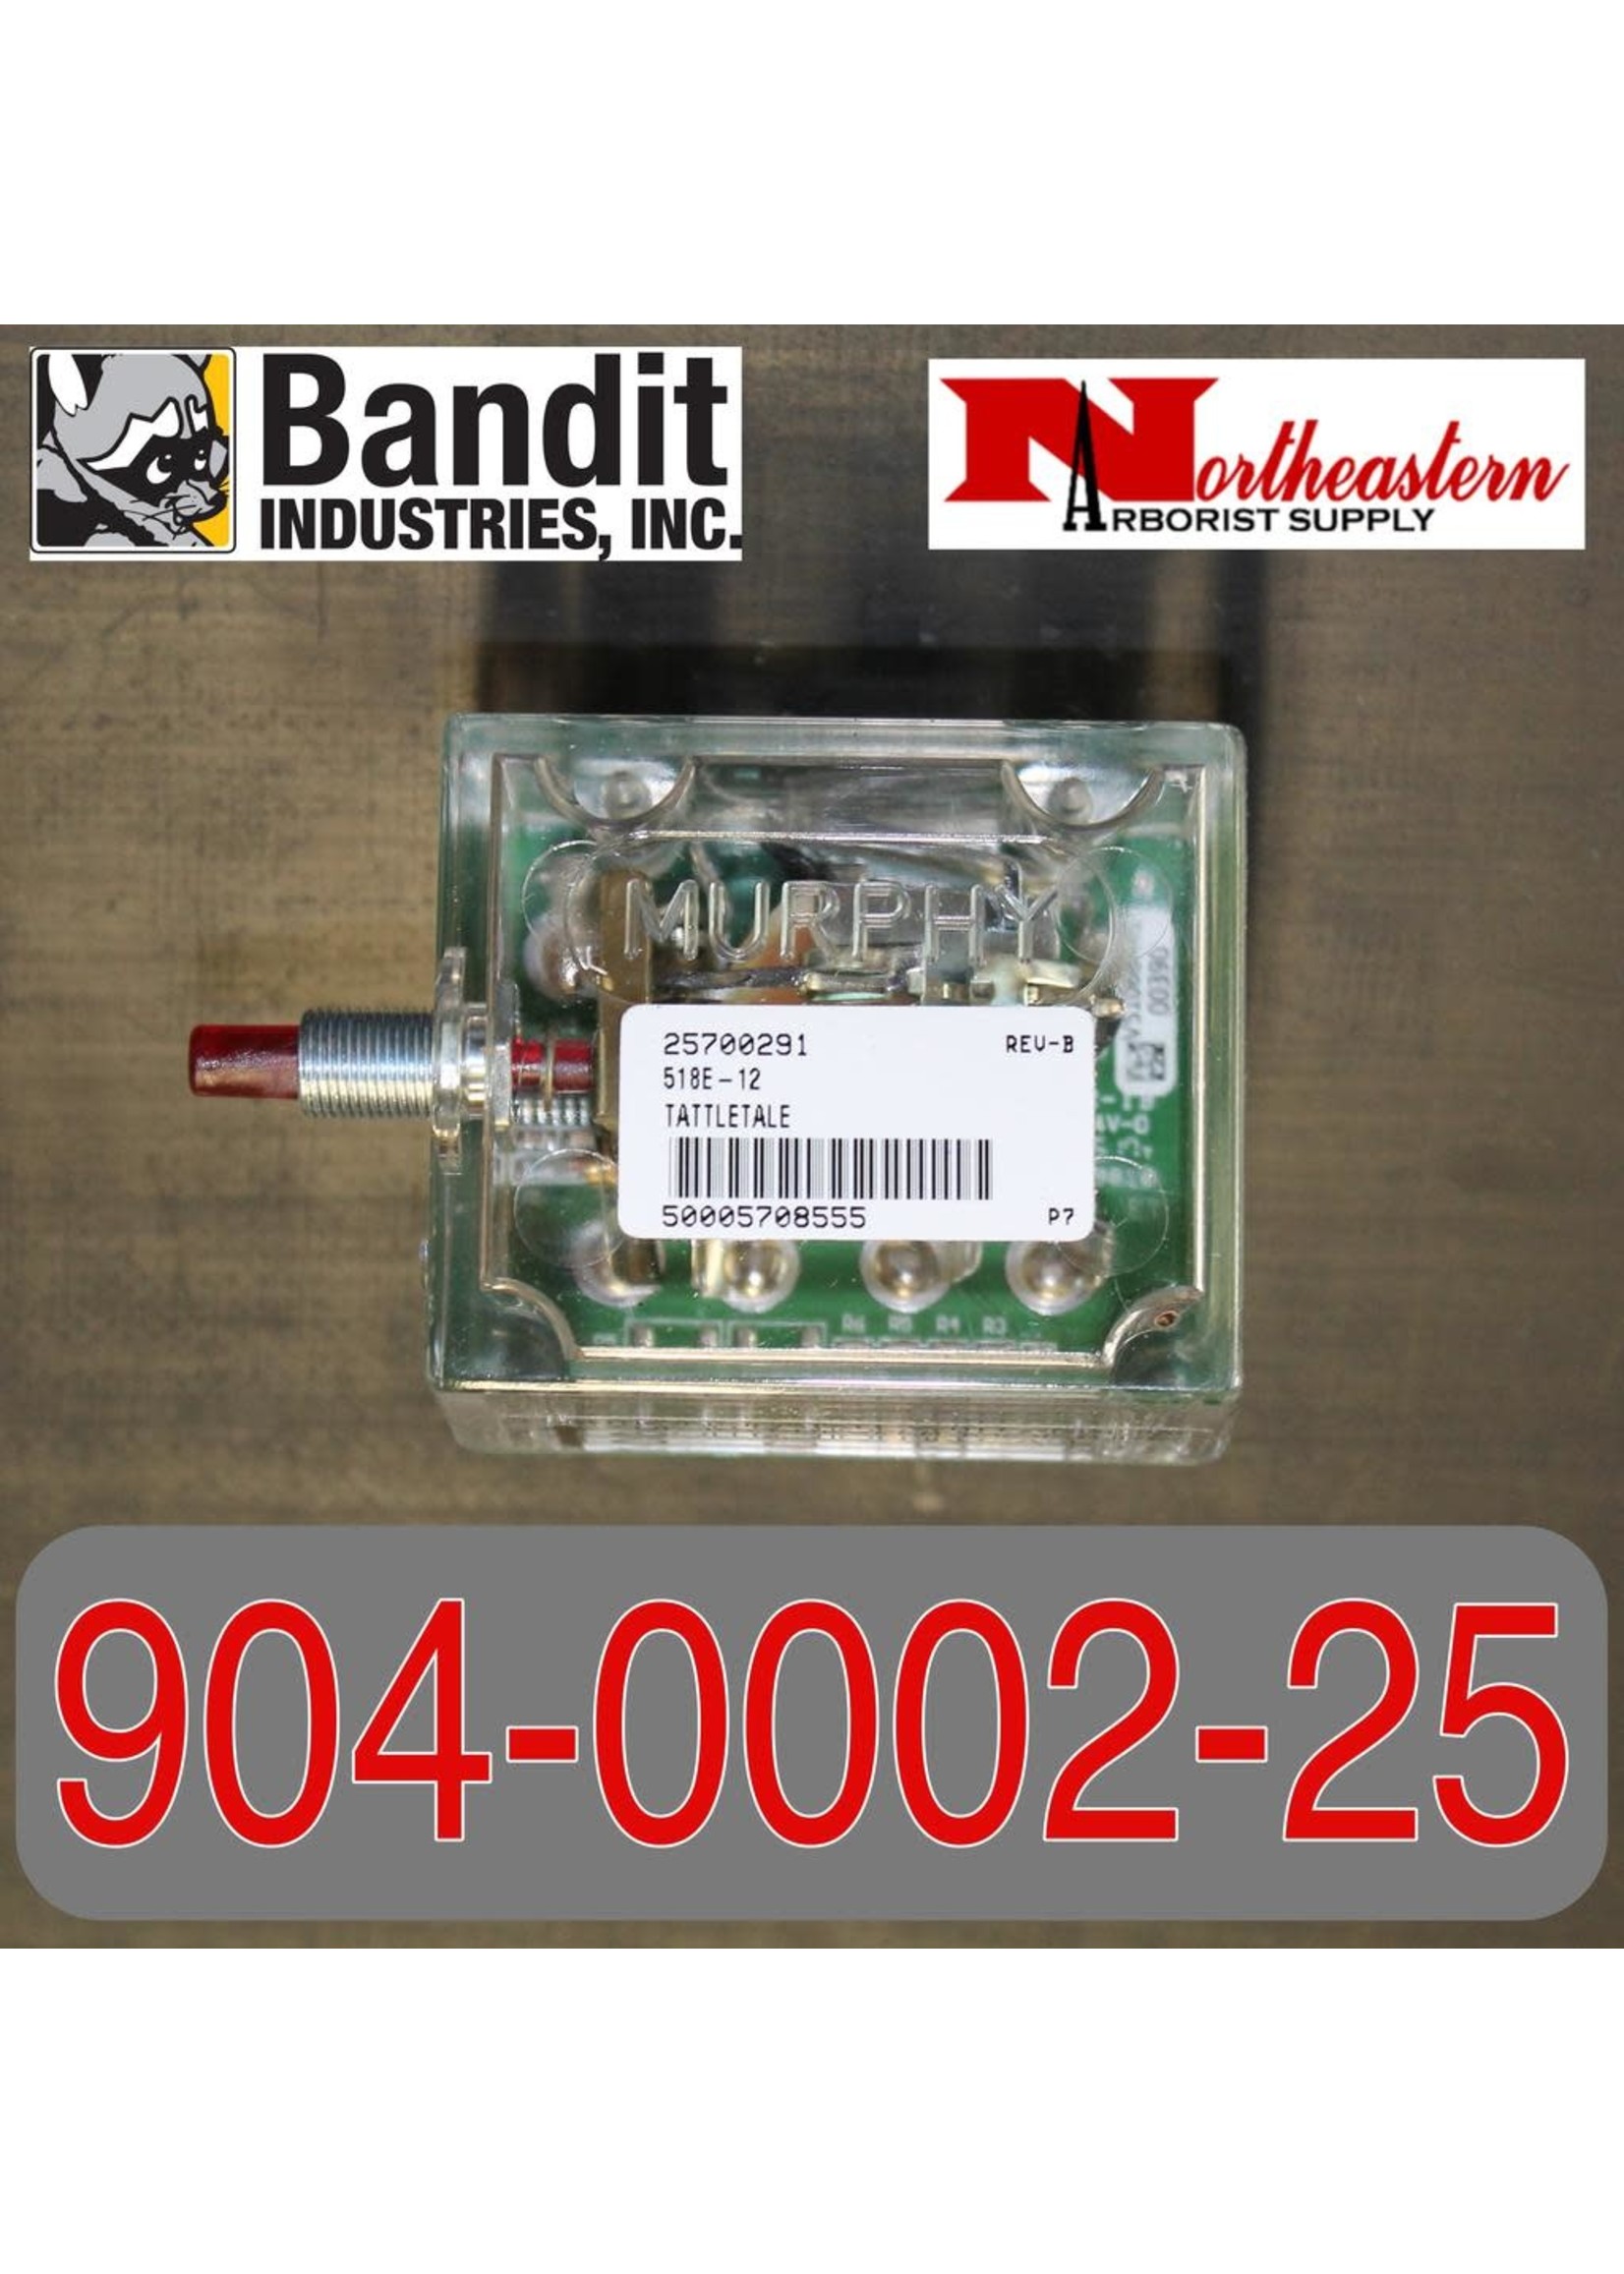 Bandit® Parts Murphy Switch, 518E 25700291, High Vibration